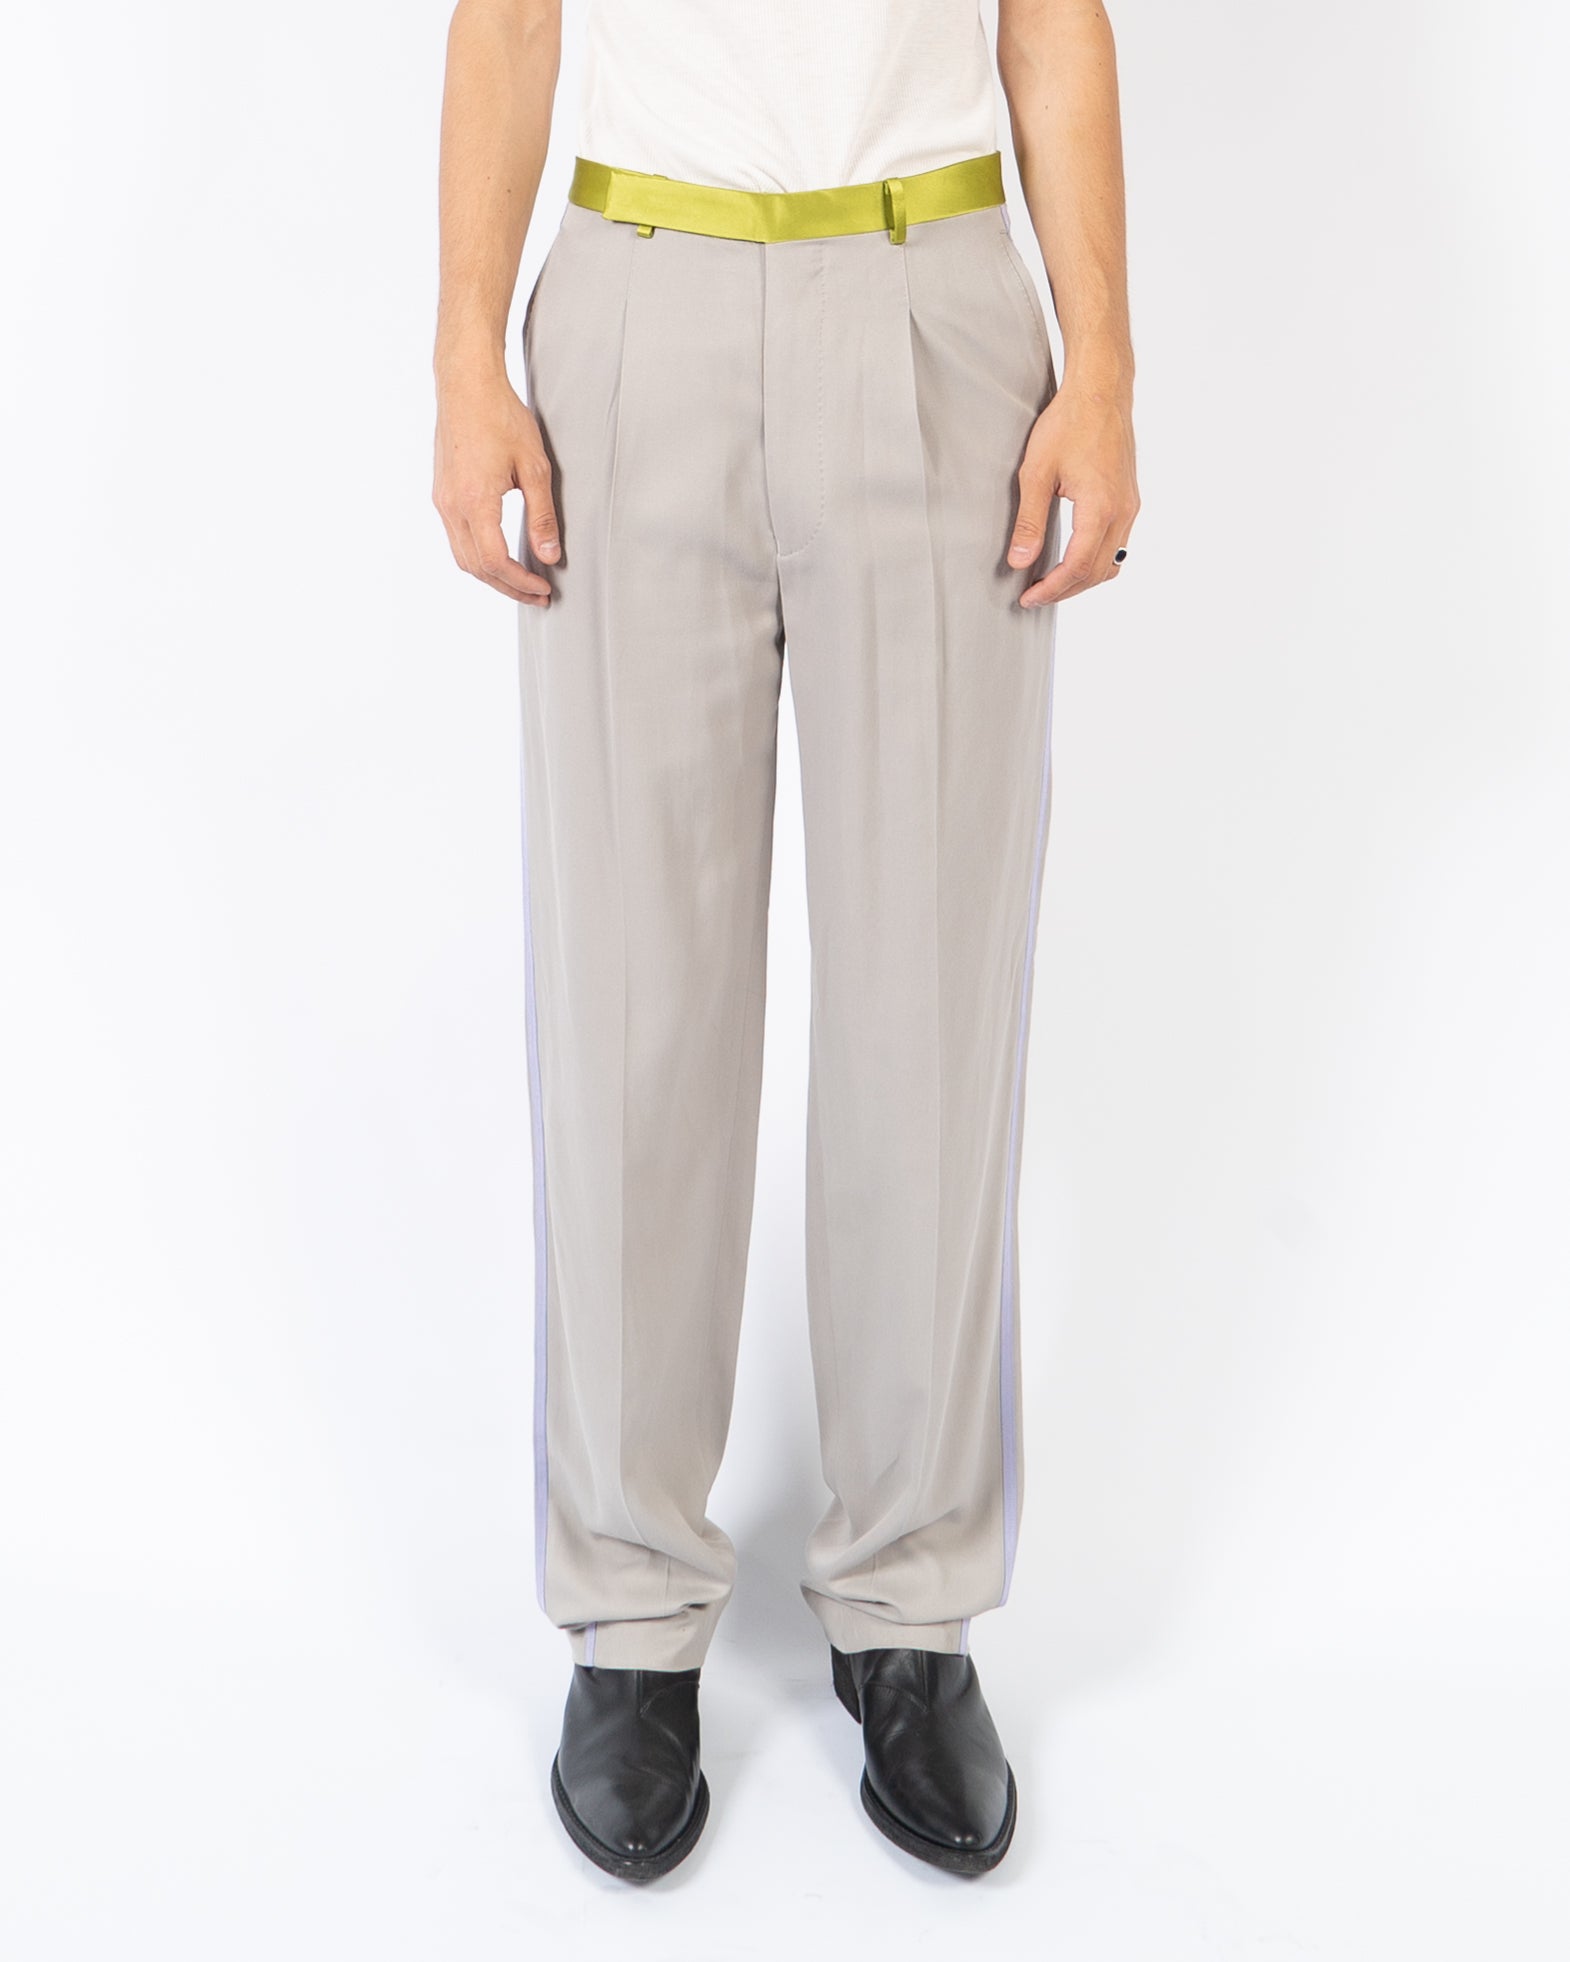 SS20 Grey Trousers with Green Taroni Waist